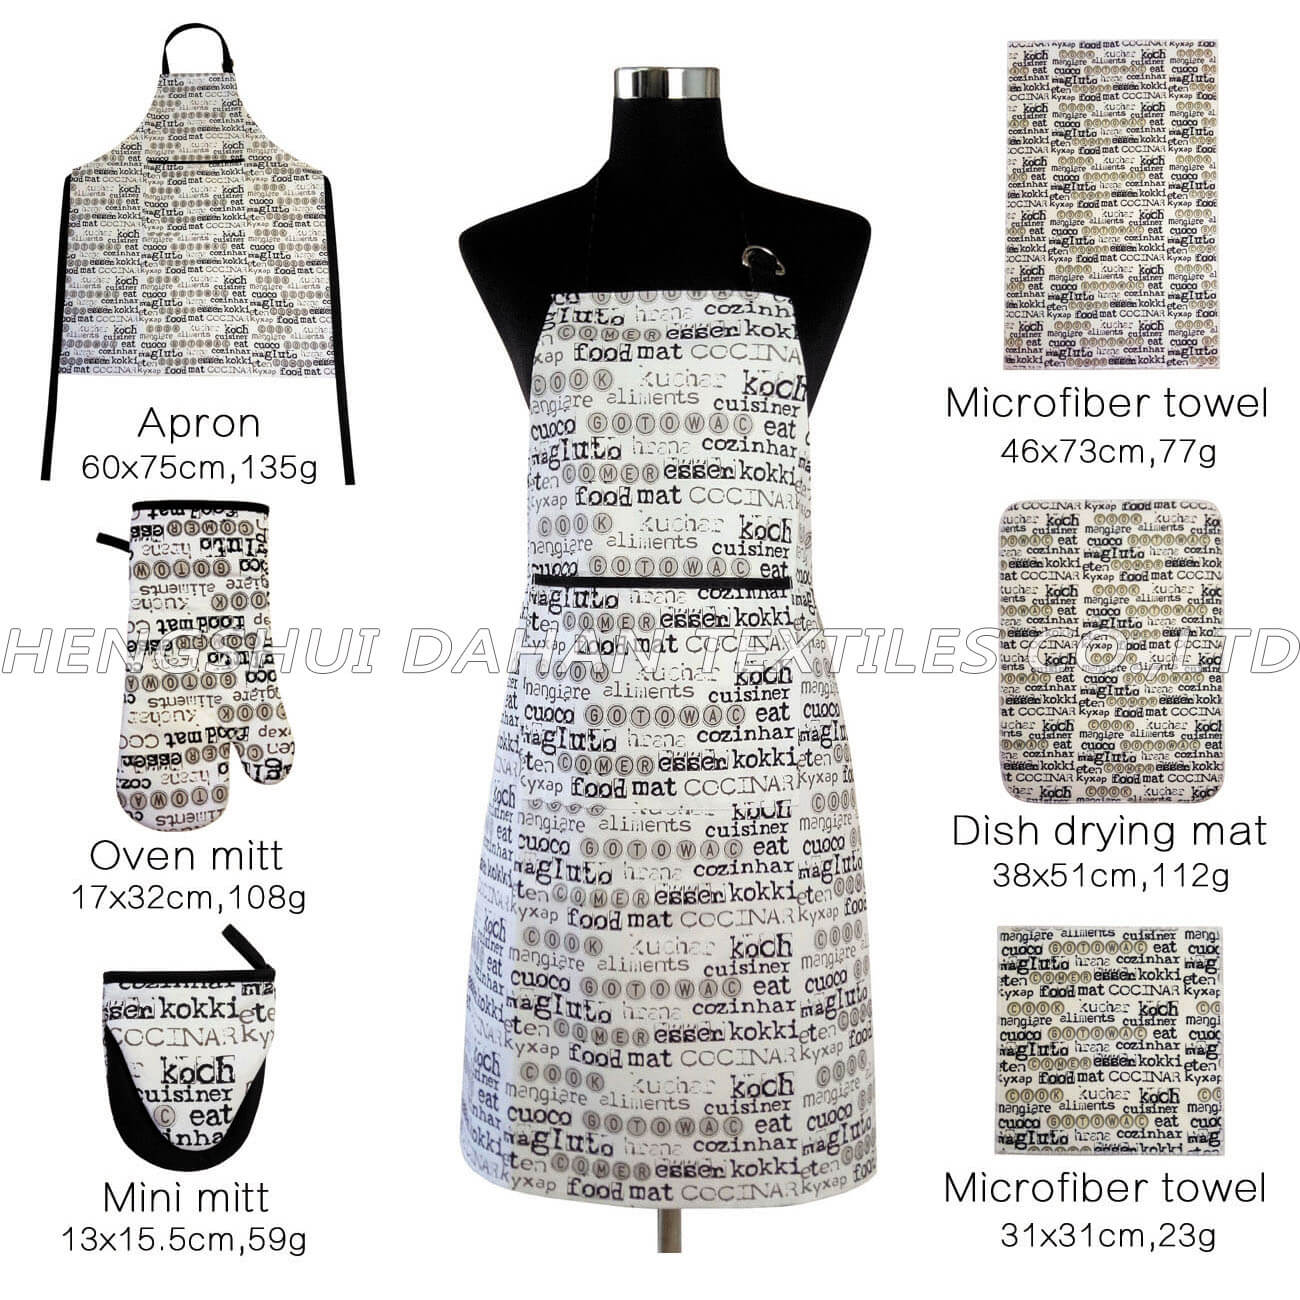 AGP20 Printing apron,oven mitt,dish drying mat,microfiber towel 6 packs